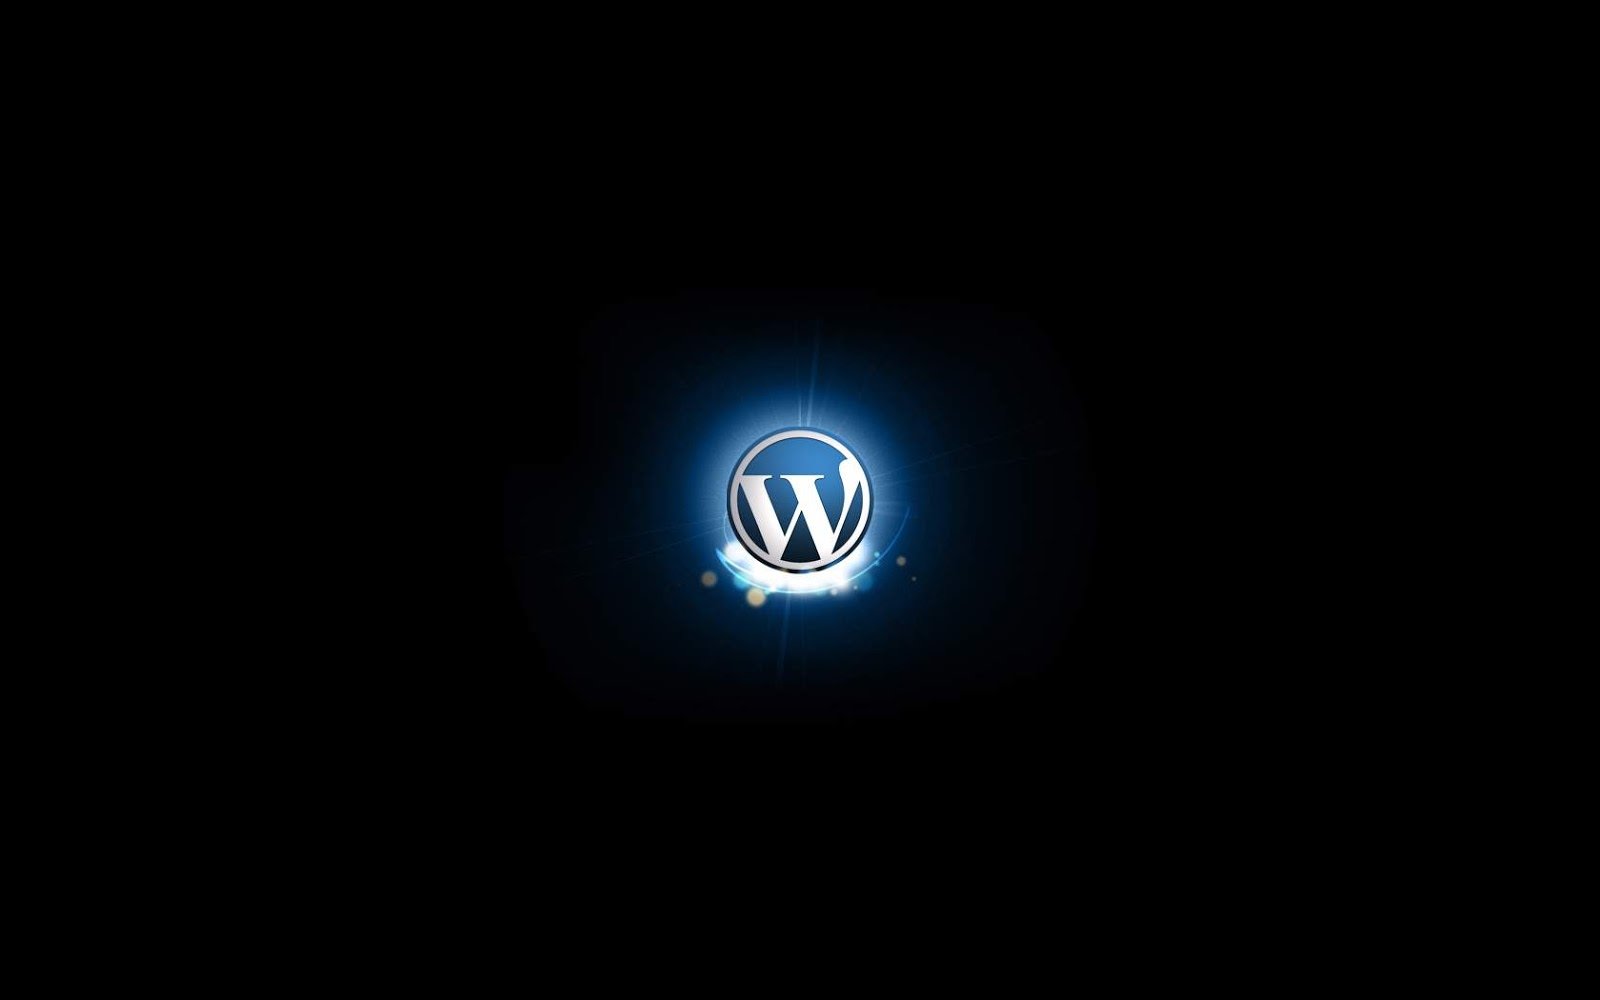 black blue wordpress logo wallpaper hd high quality black blue